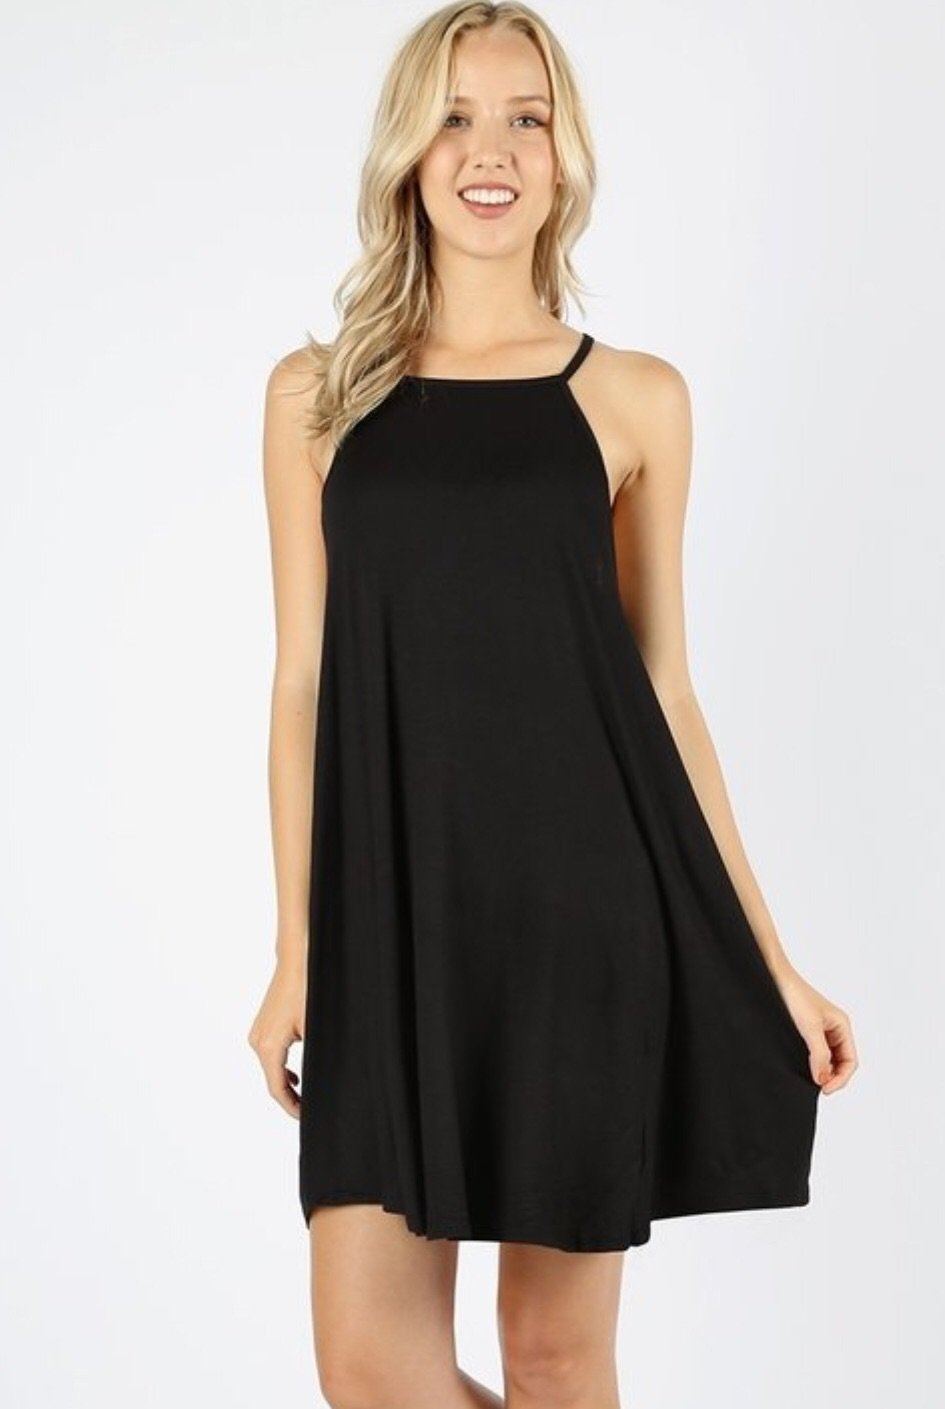 Women's Black Top Spaghetti Strap Sleeveless Dress: S/M/L Tunics MomMe and More 